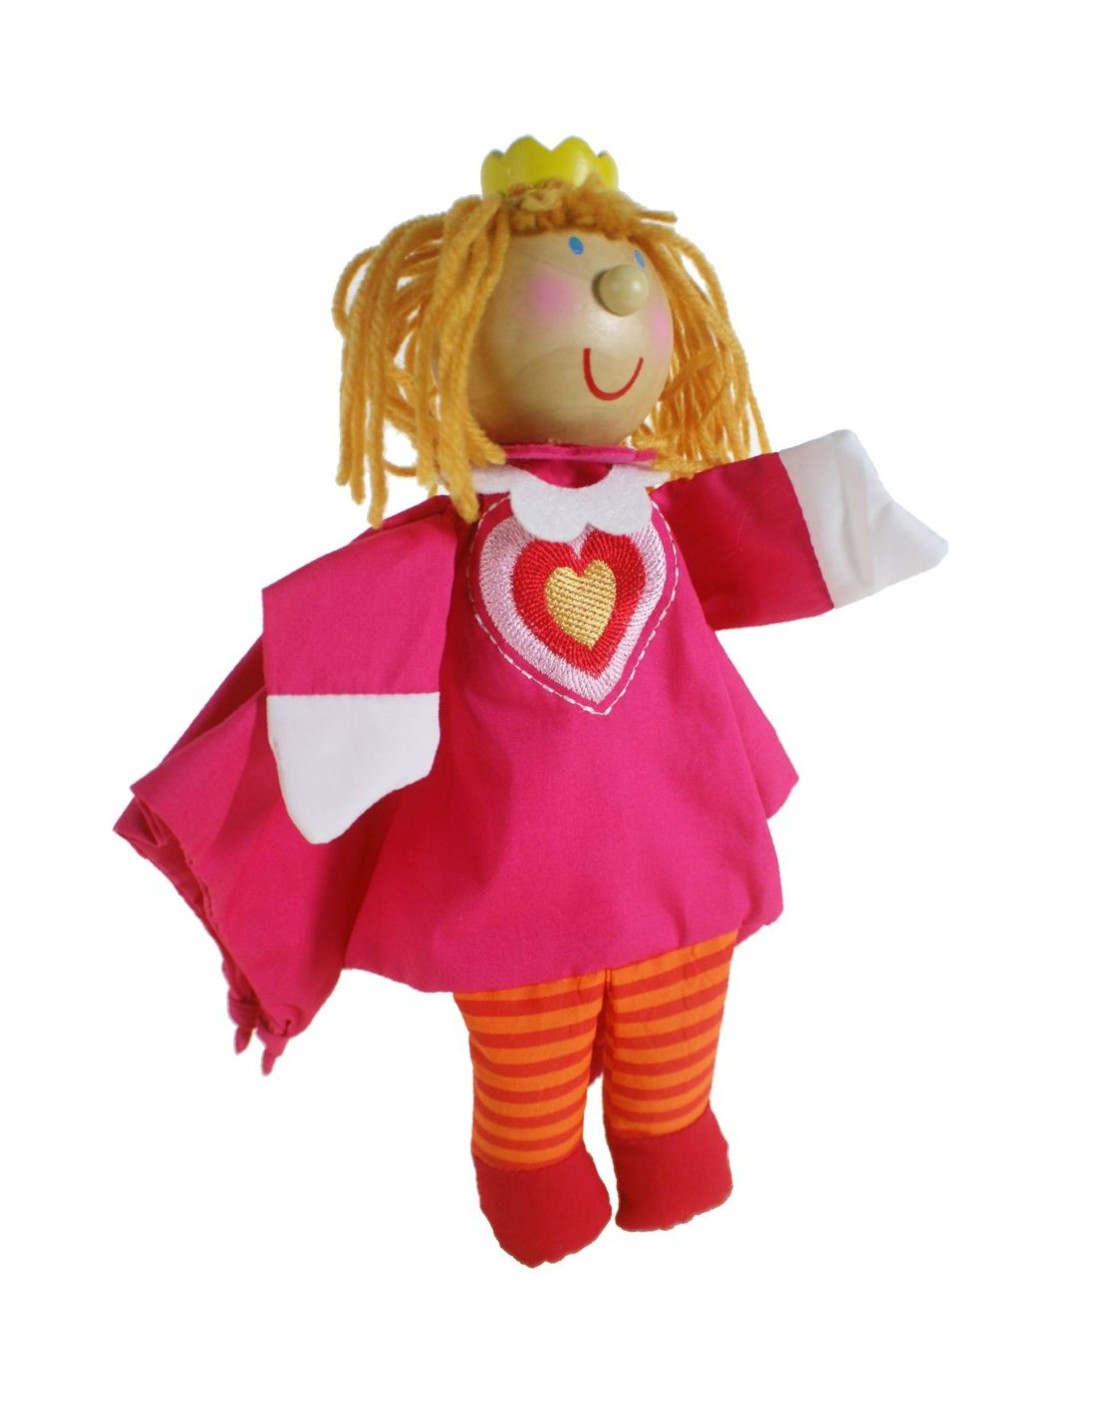 Marioneta Títere de mano diseño princesa con cabeza de madera juguete clásico tradicional para niños niñas